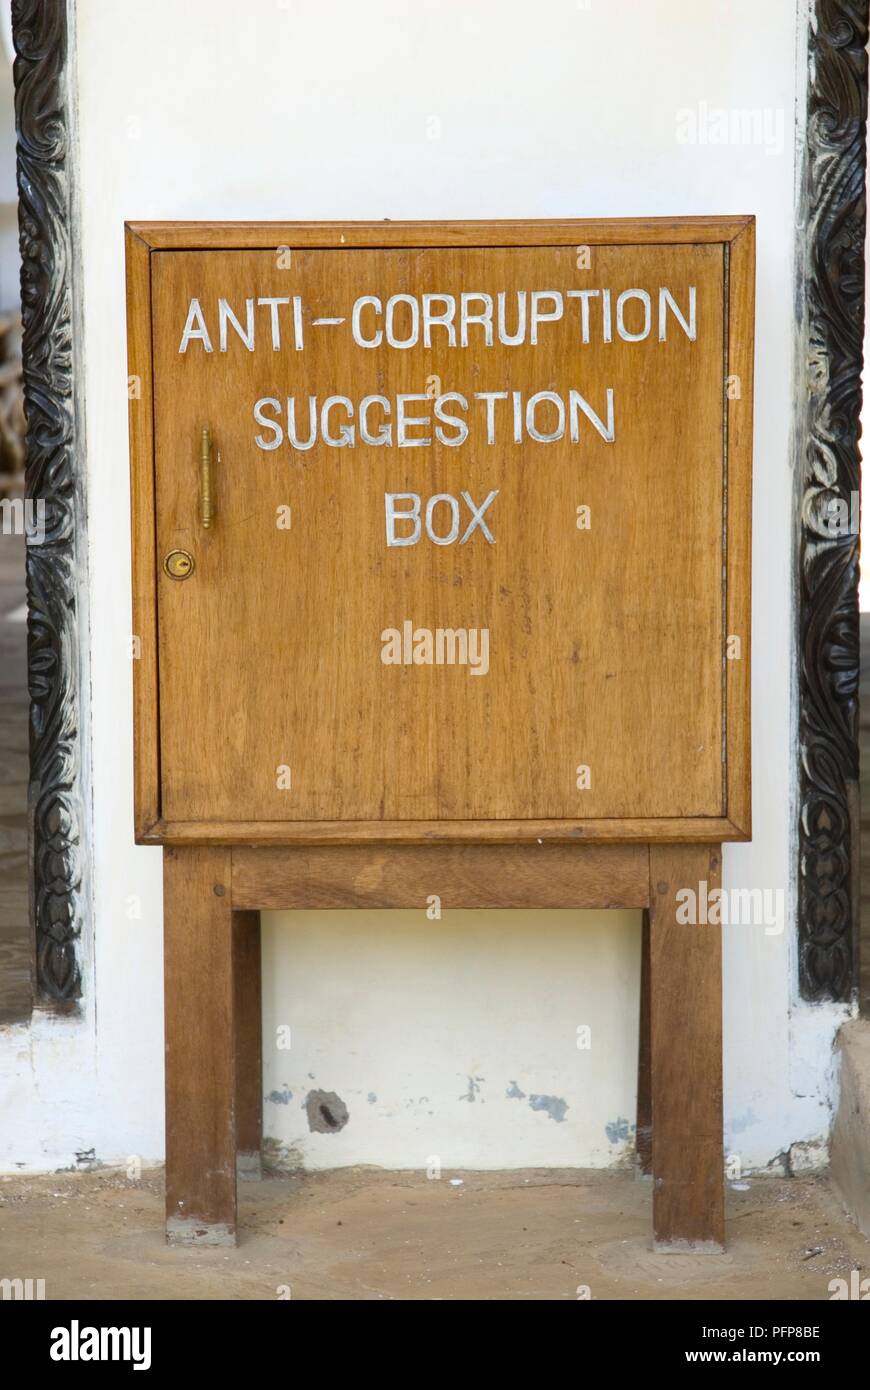 Kenia, Gedi National Monument, Korruptionsbekämpfung Suggestion Box Stockfoto